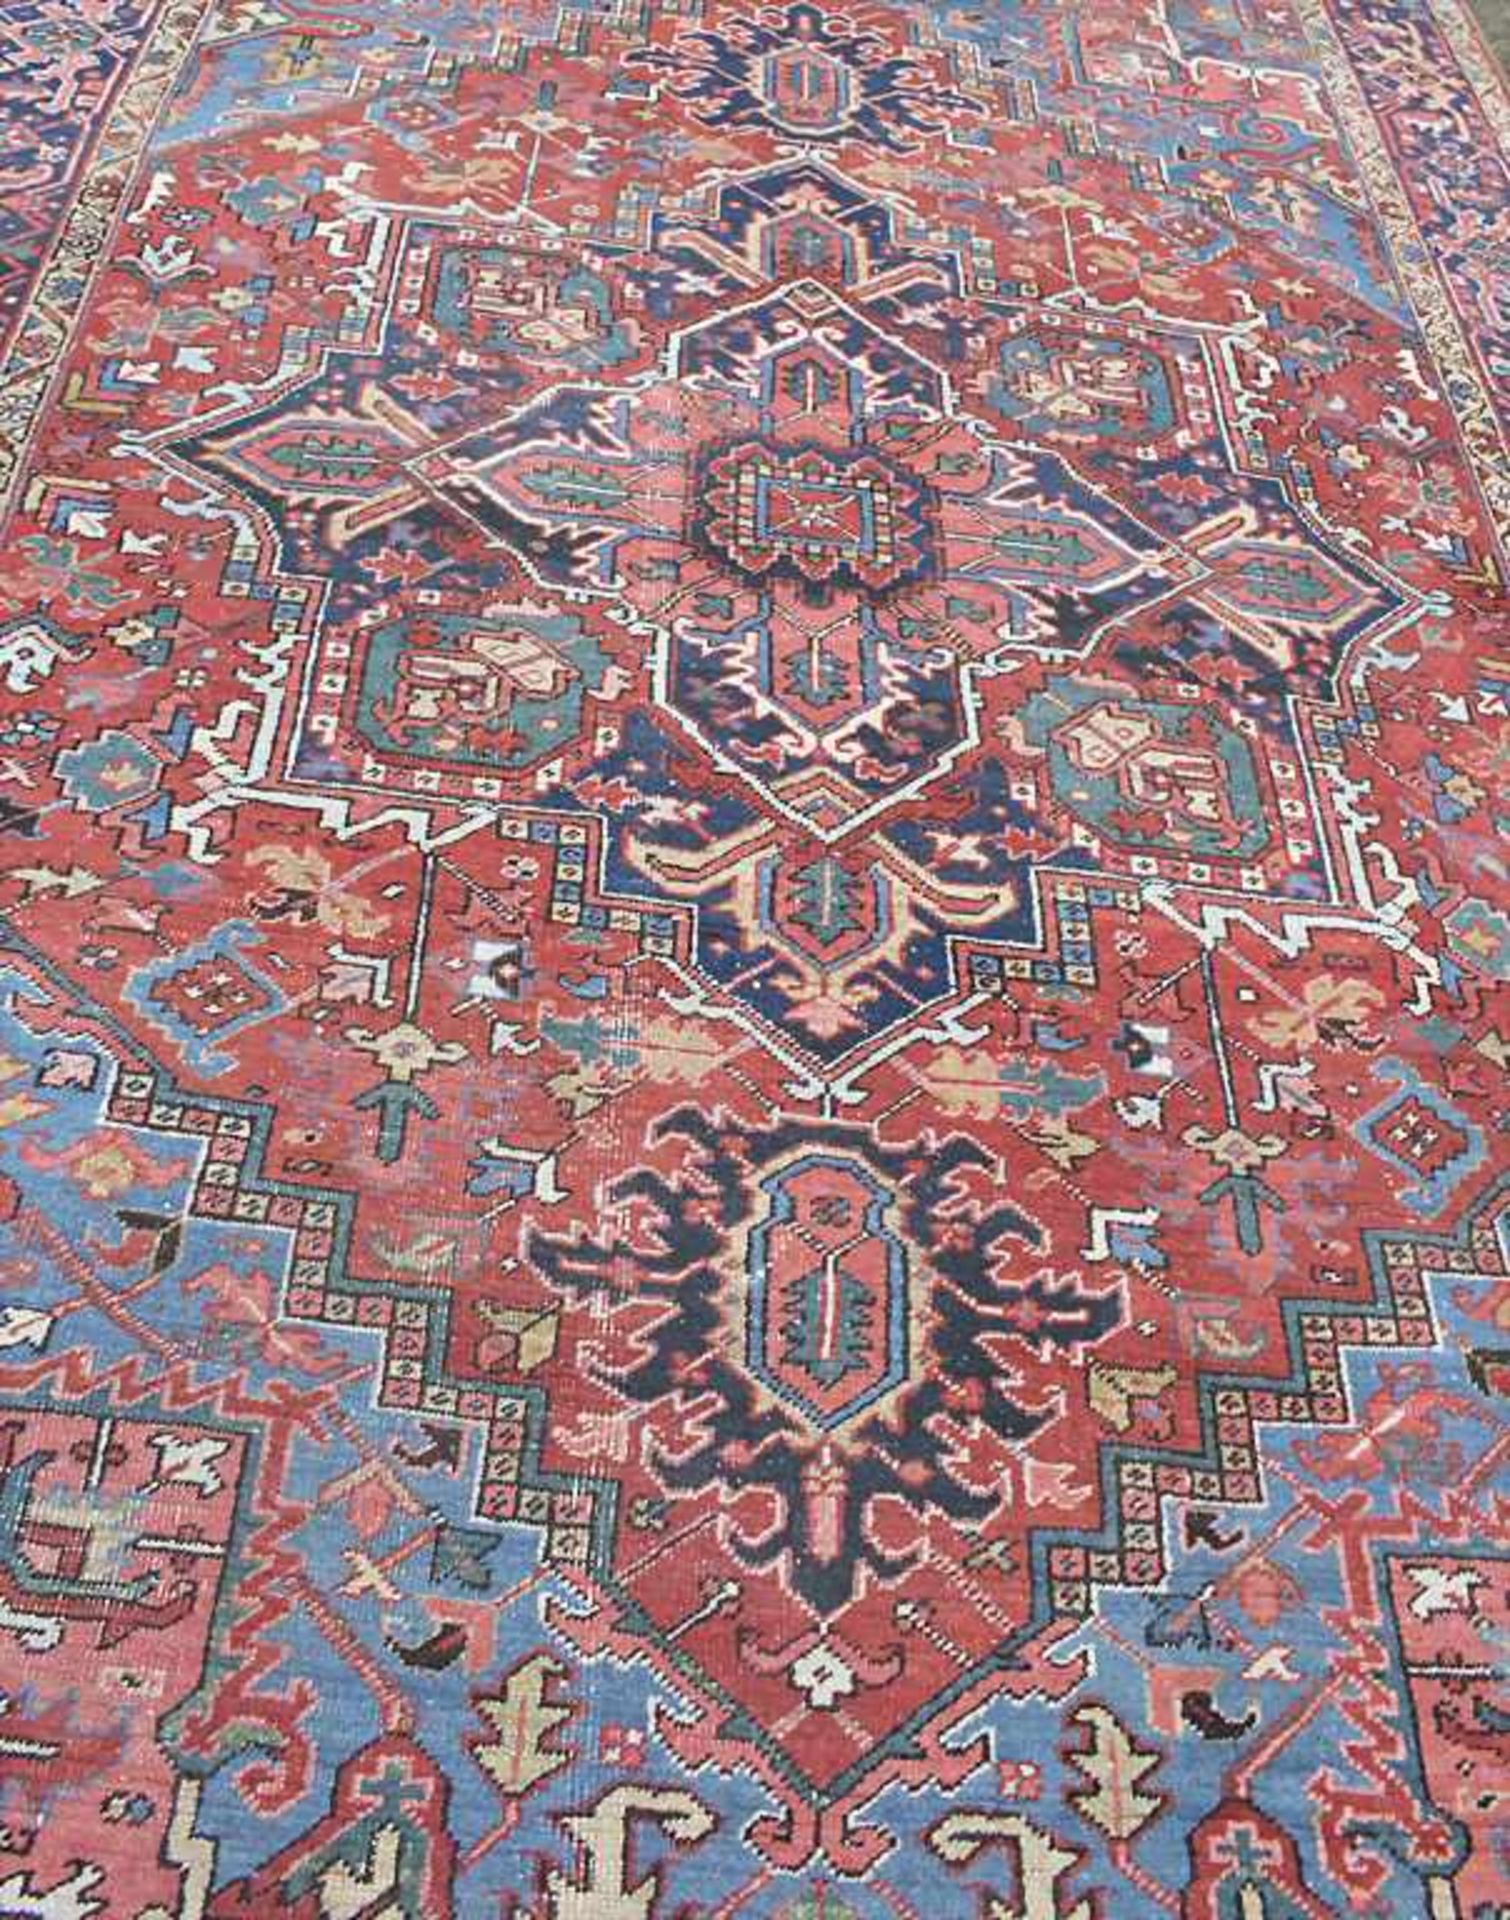 Orientteppich 'Heriz' / An oriental carpet 'Heriz'Material: Wolle, Maße: 330 x 220 cm, Zustand: gut, - Bild 2 aus 4